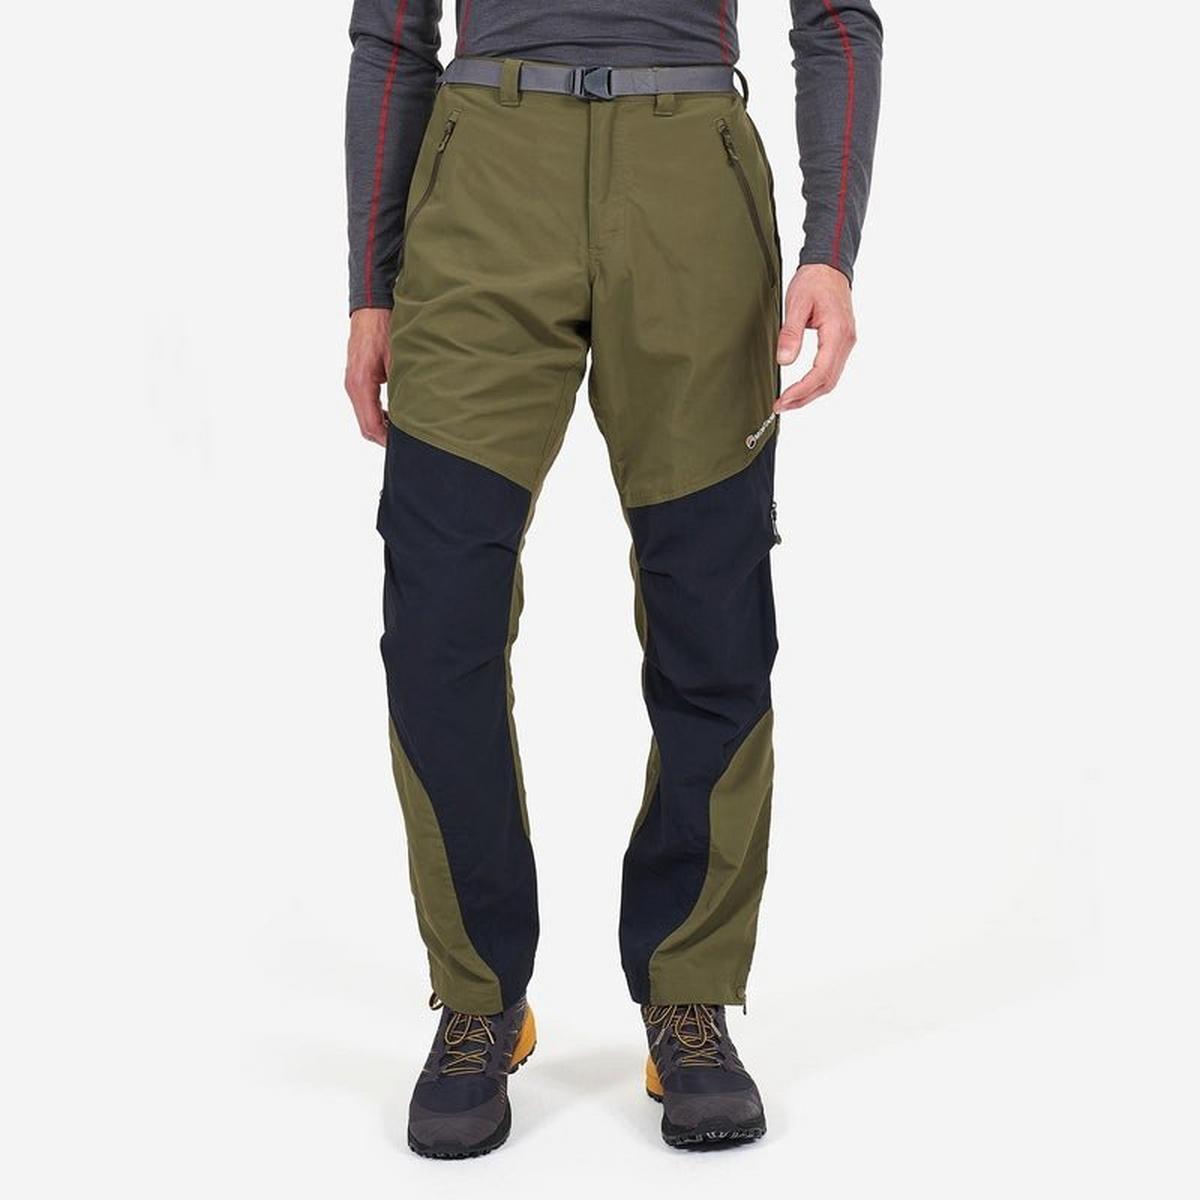 Montane Men's Terra Pants (Short) - Kelp Green